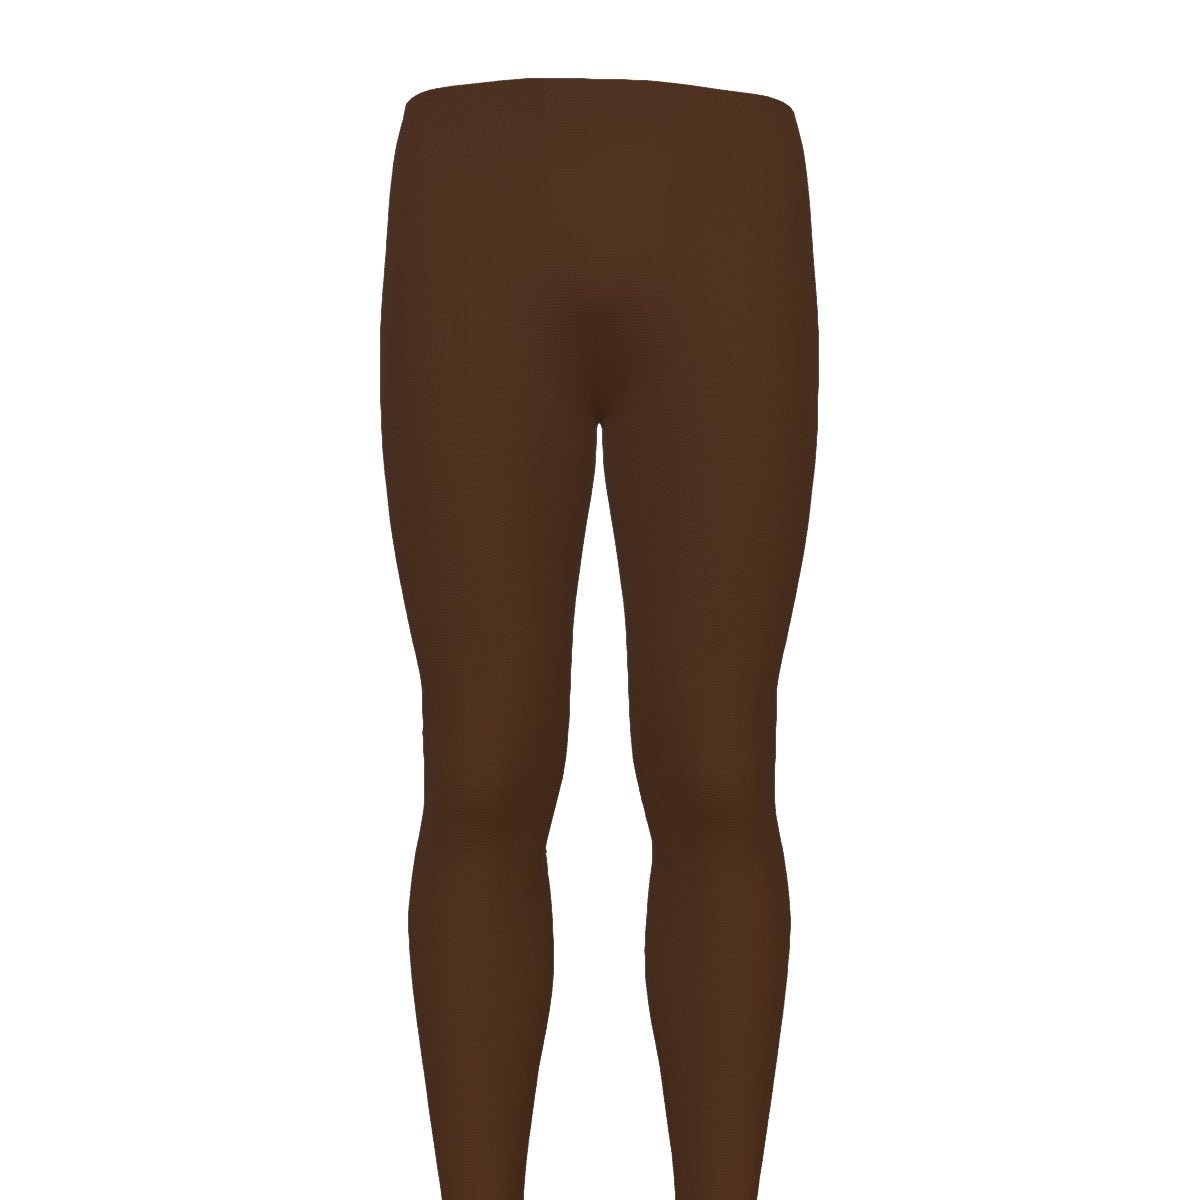 NUDETONE Chocolate Brown Men's leggings | CANAANWEAR | Men's Leggings |